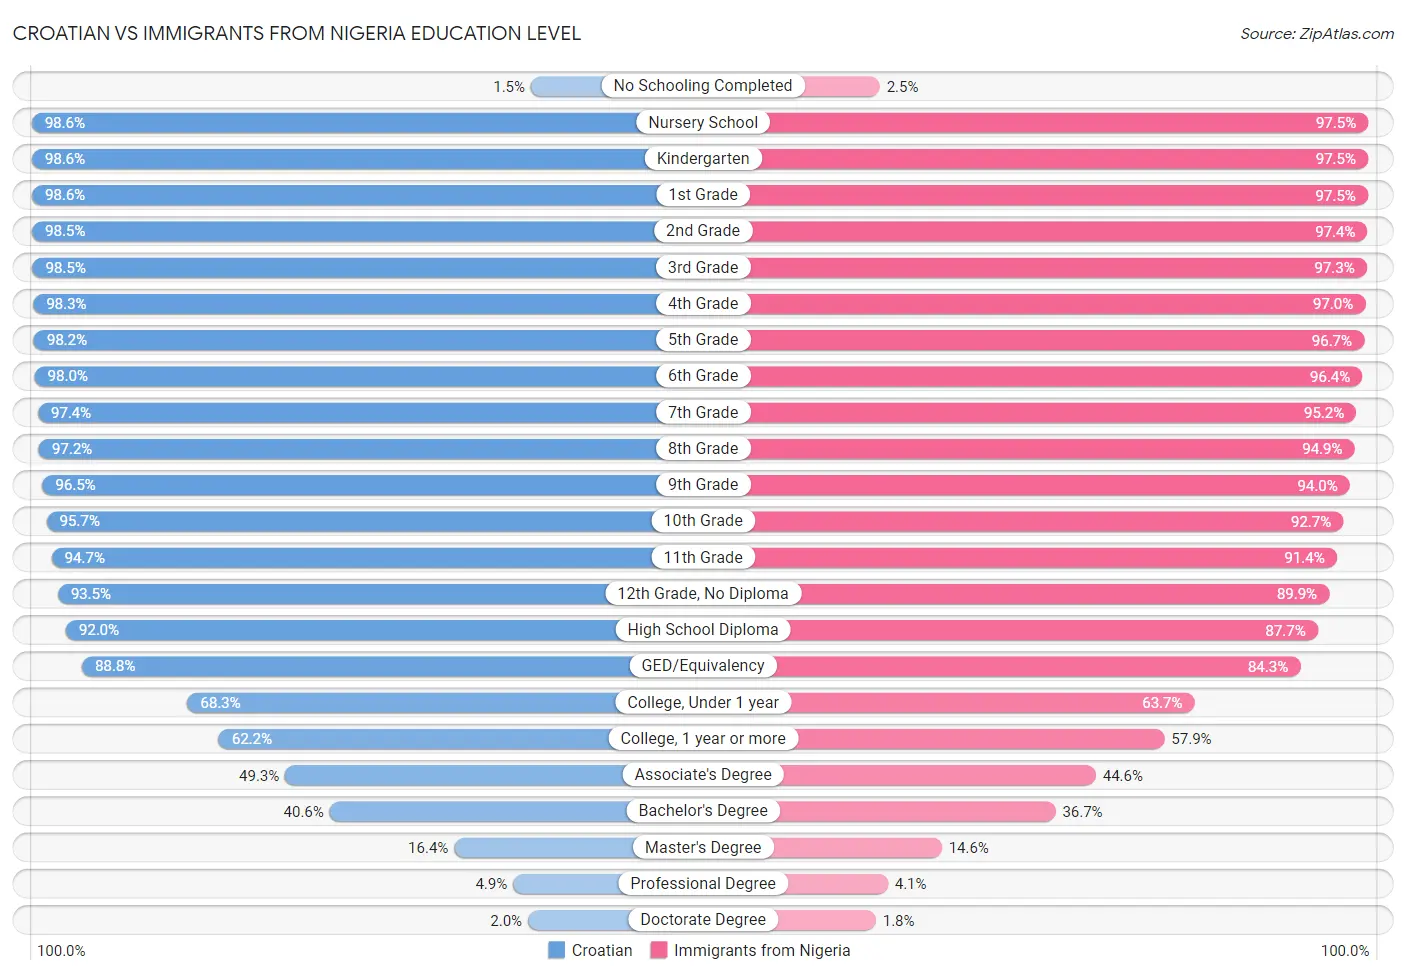 Croatian vs Immigrants from Nigeria Education Level